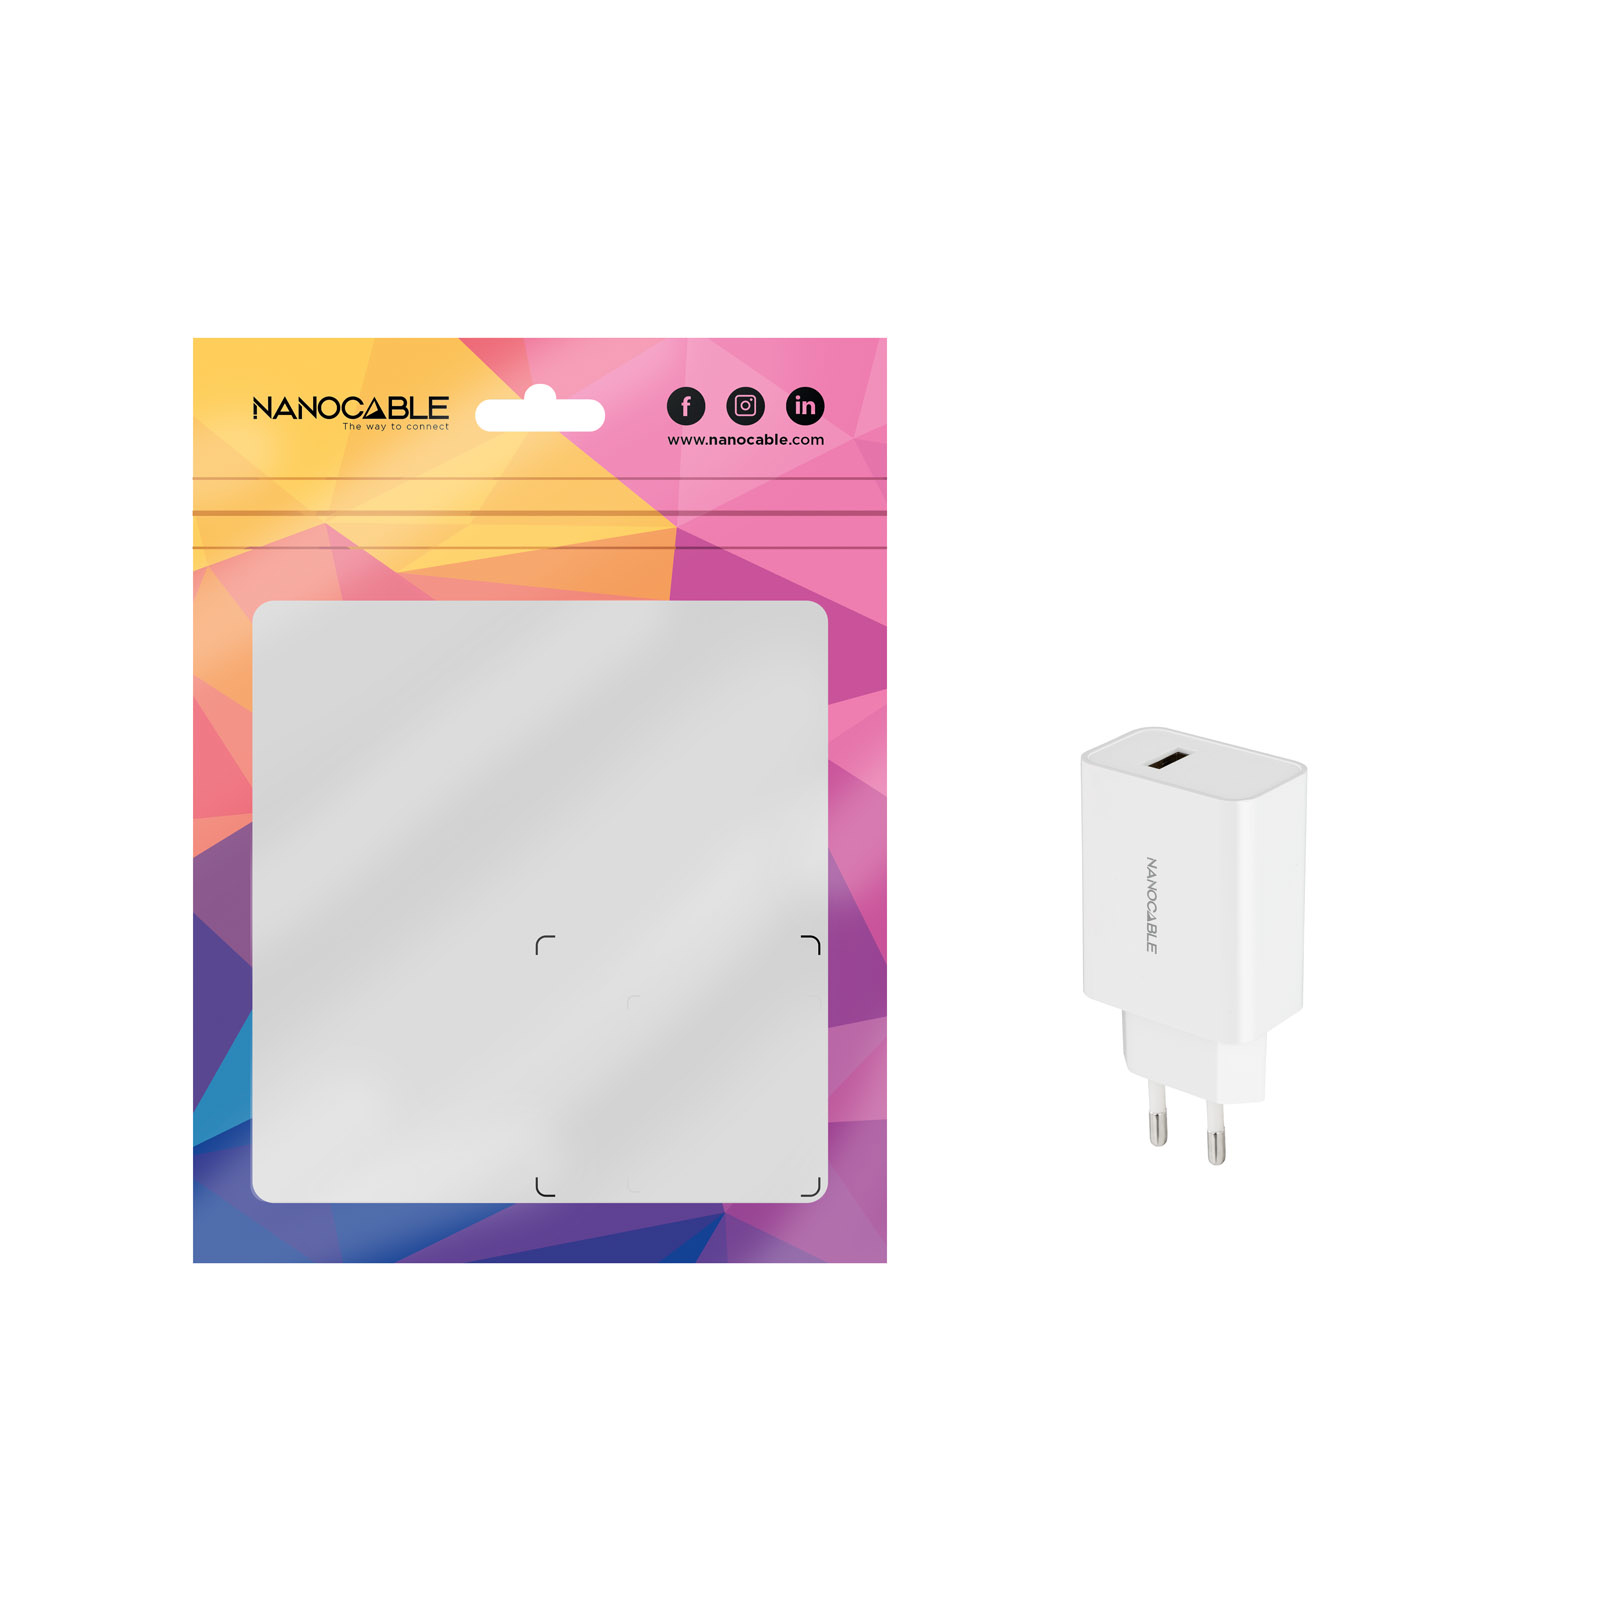 Nanocable - Cargador USB, 5V/1A, Blanco